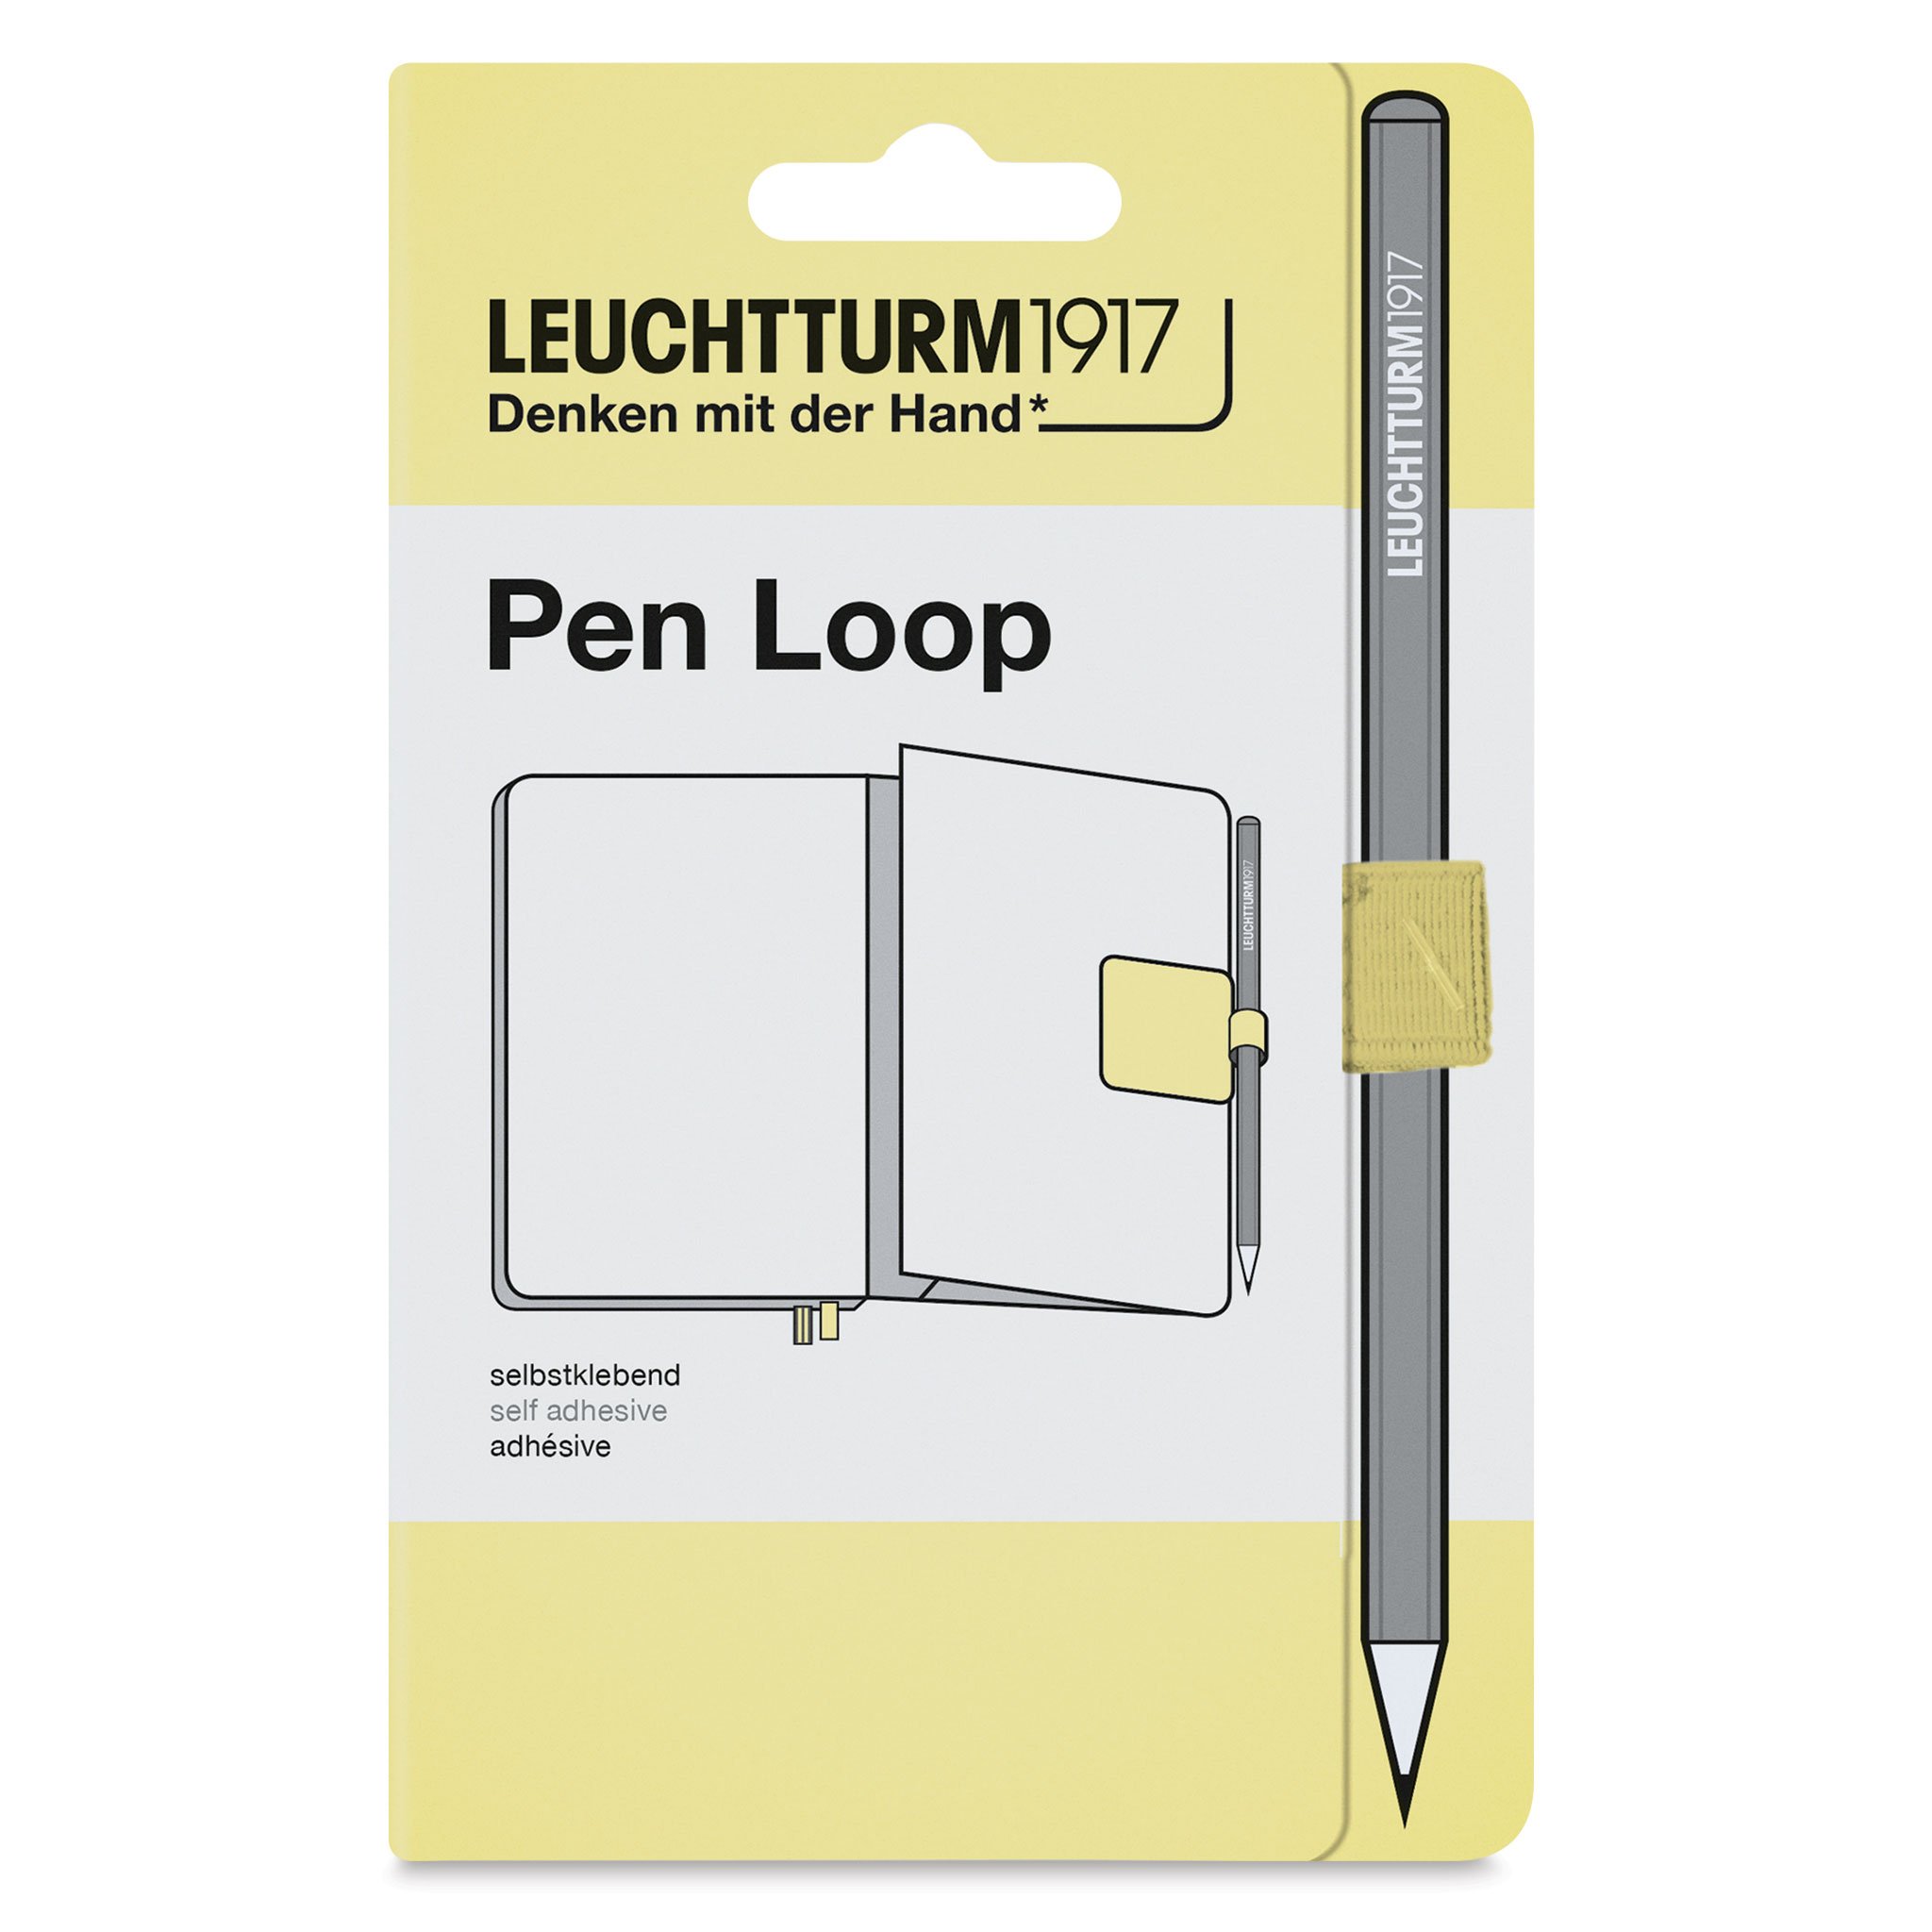 13. Lechtturm Adhesive Pen Loop